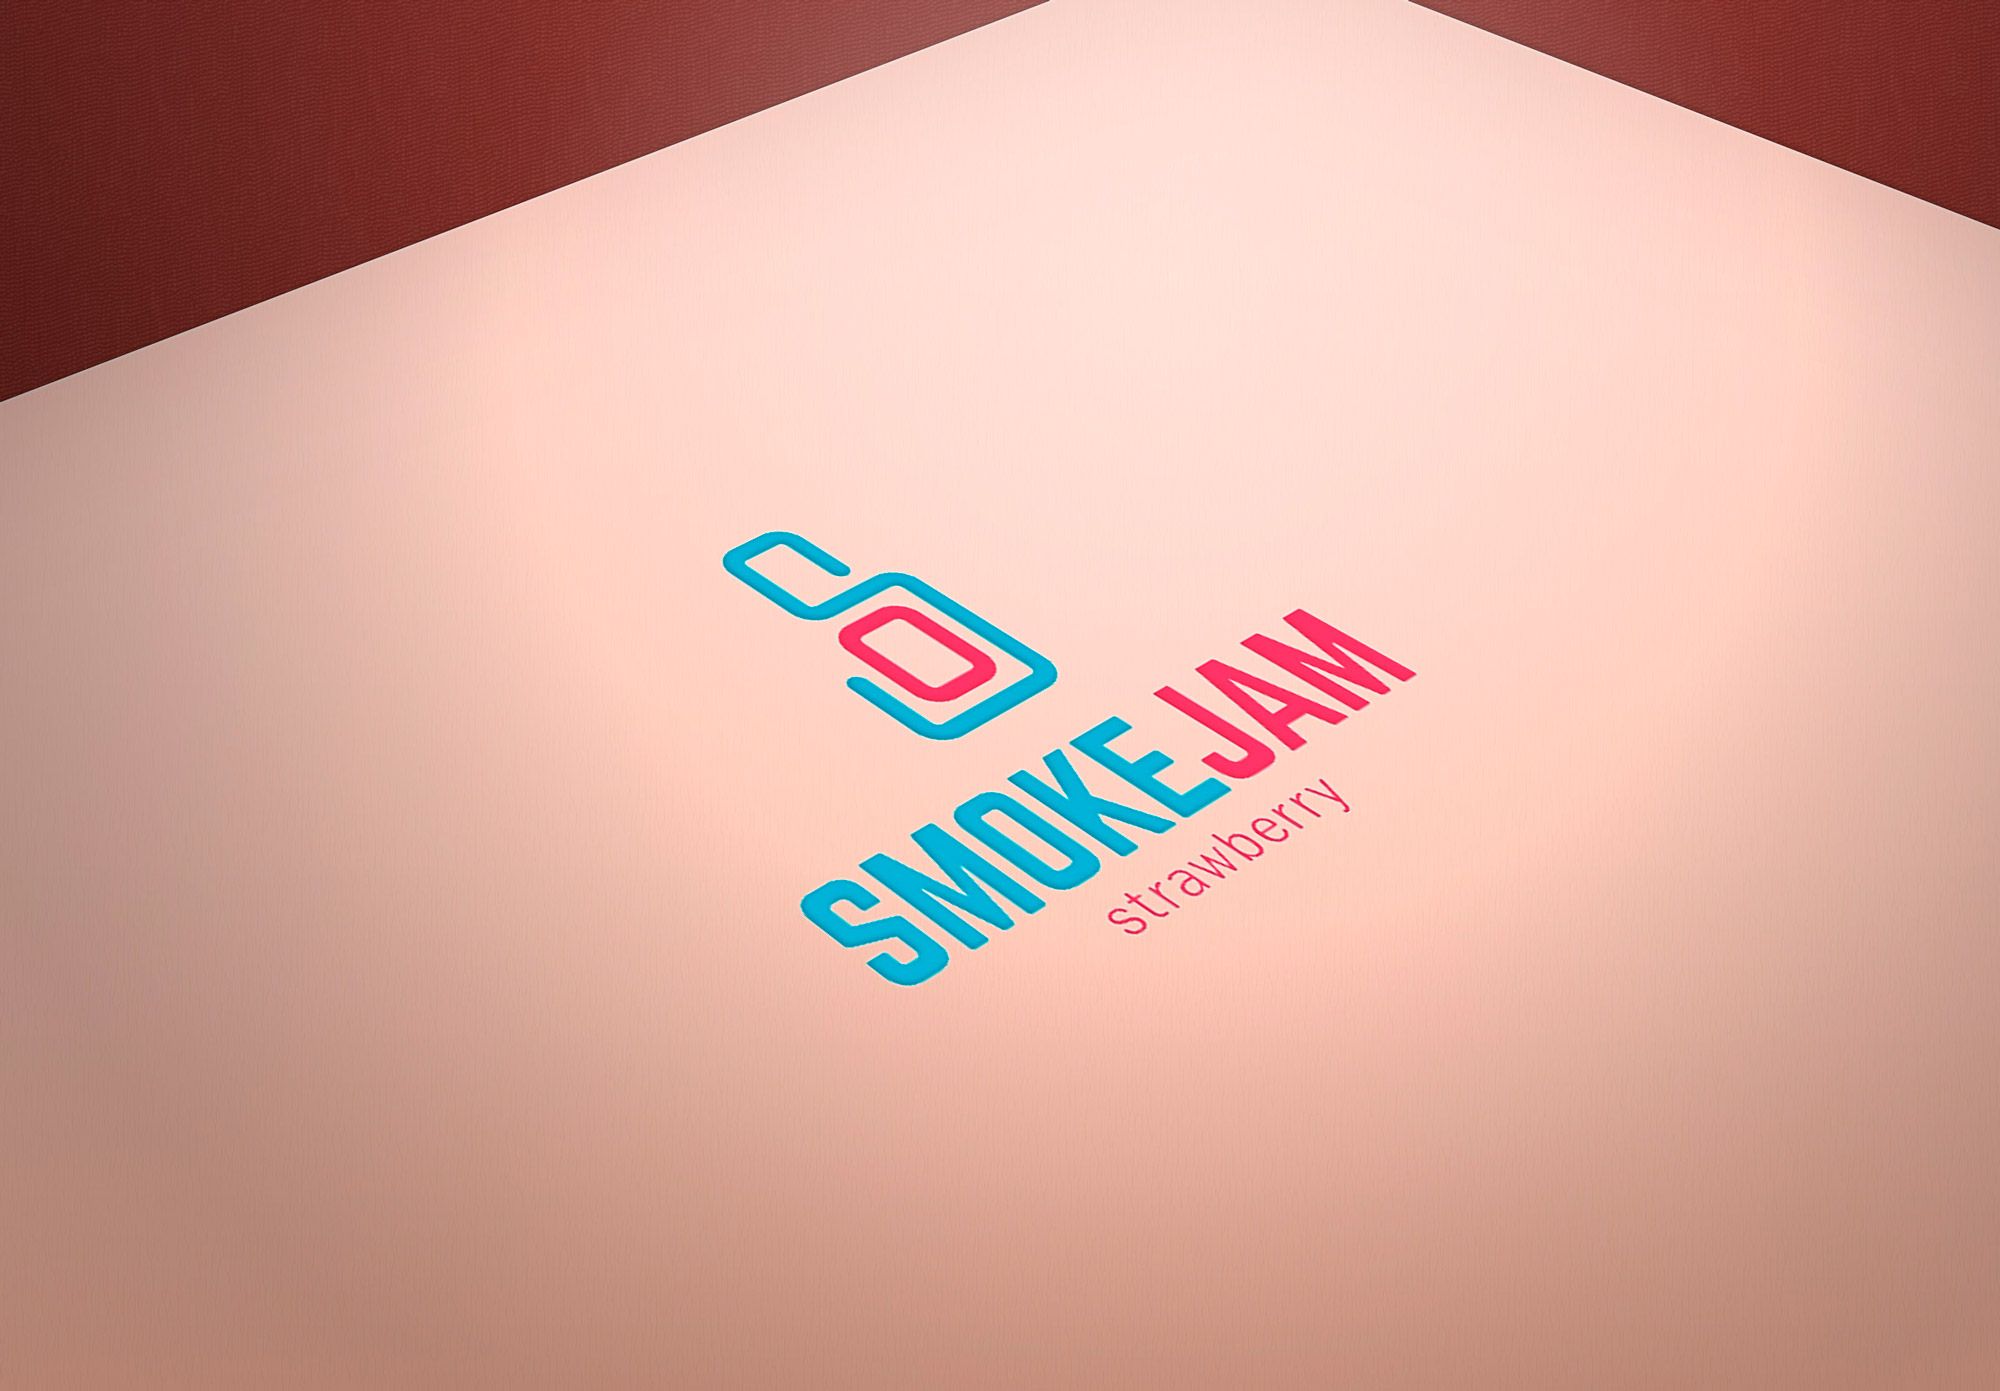 Логотип для SmokeJam - дизайнер Sashka_K